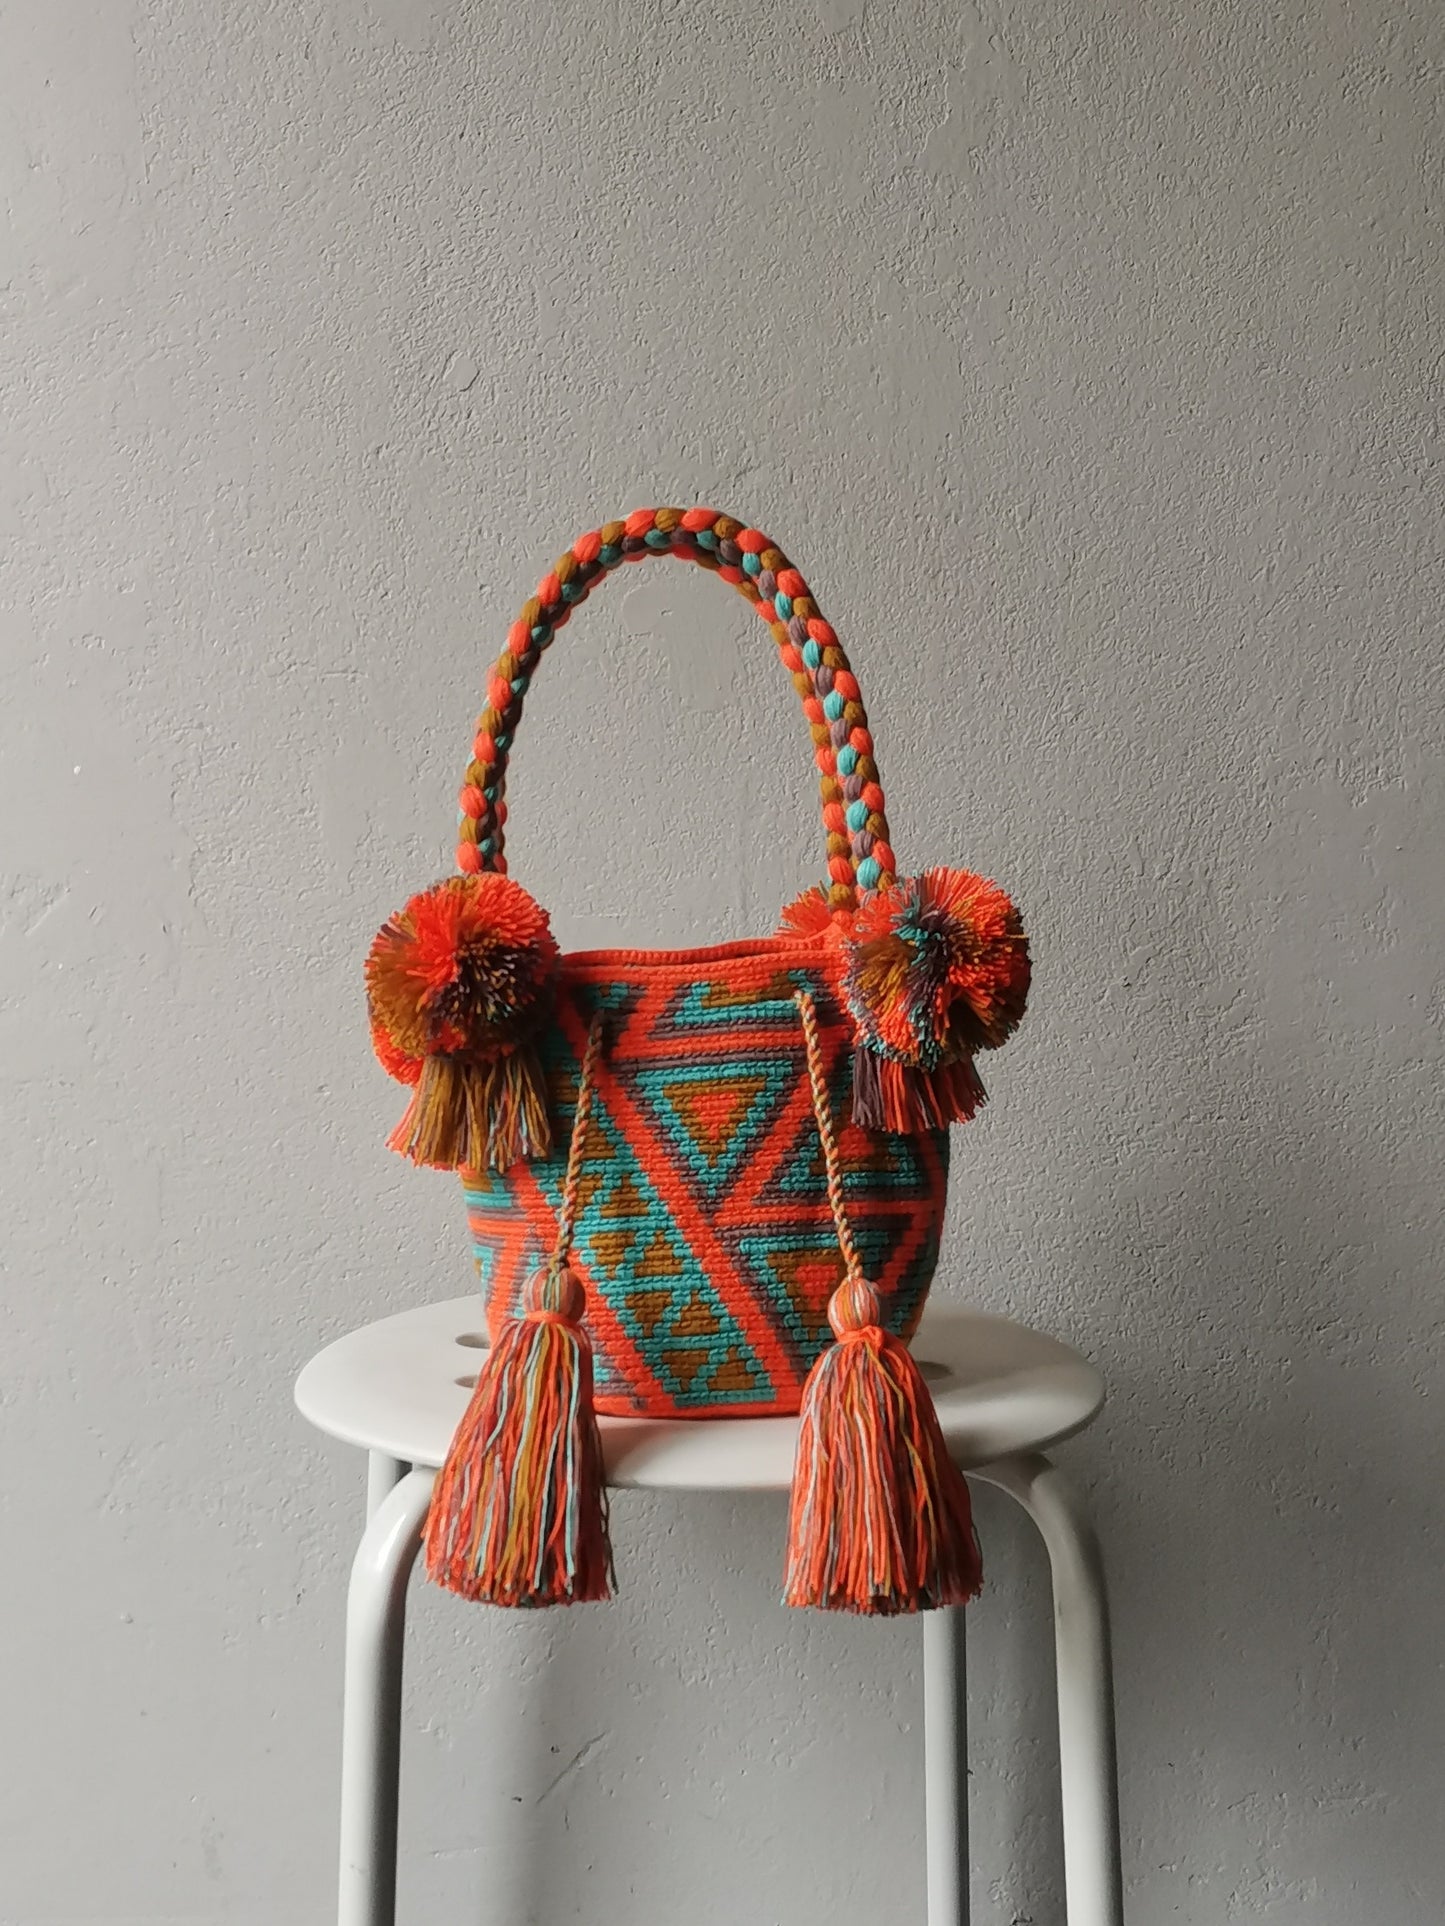 Orange and dove gray S mochila handbag